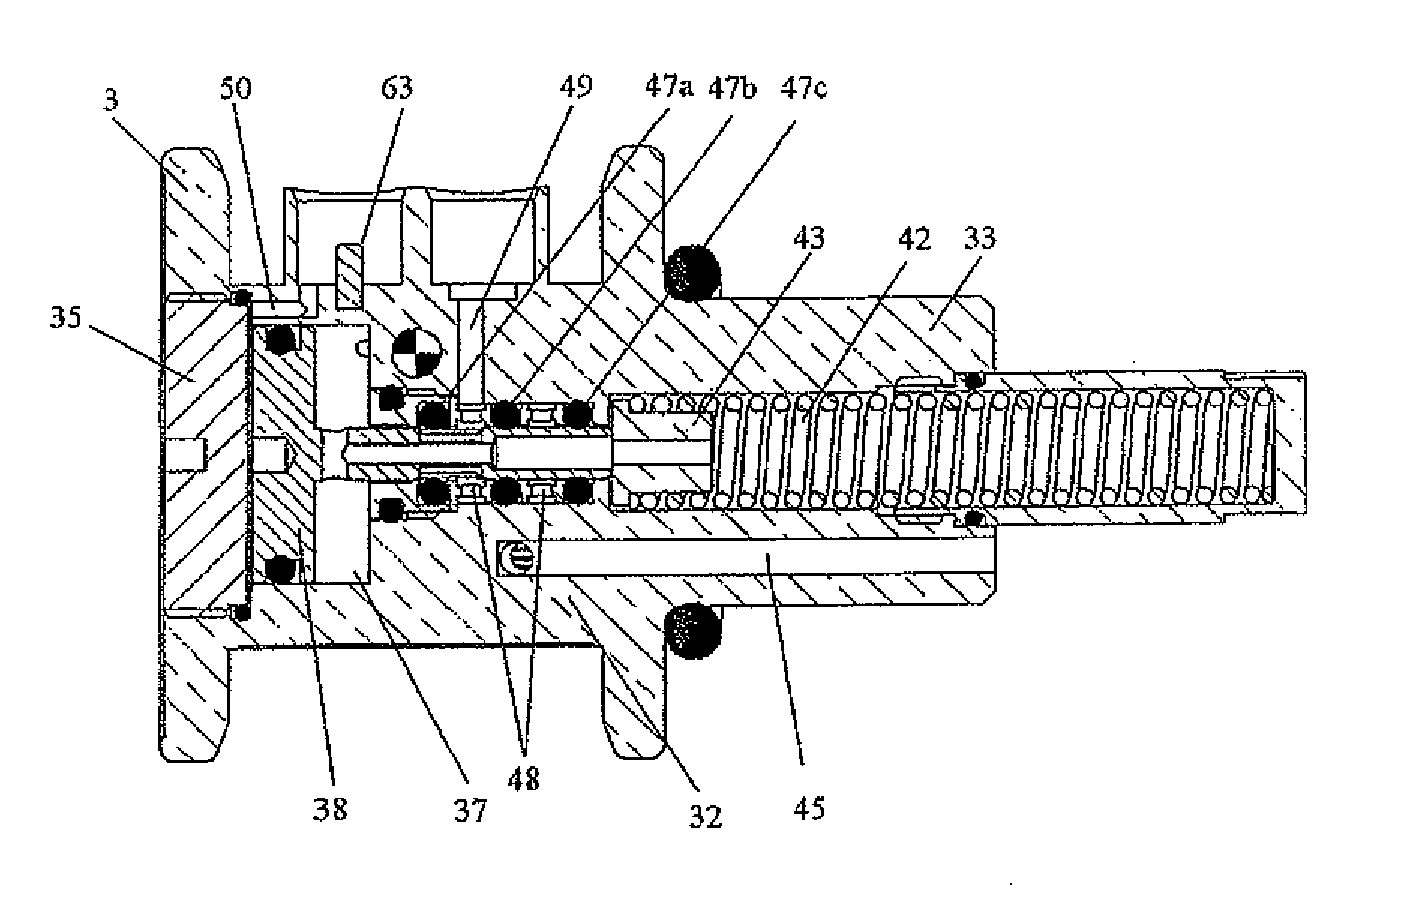 Tamper-resistant valve and connection arrangement